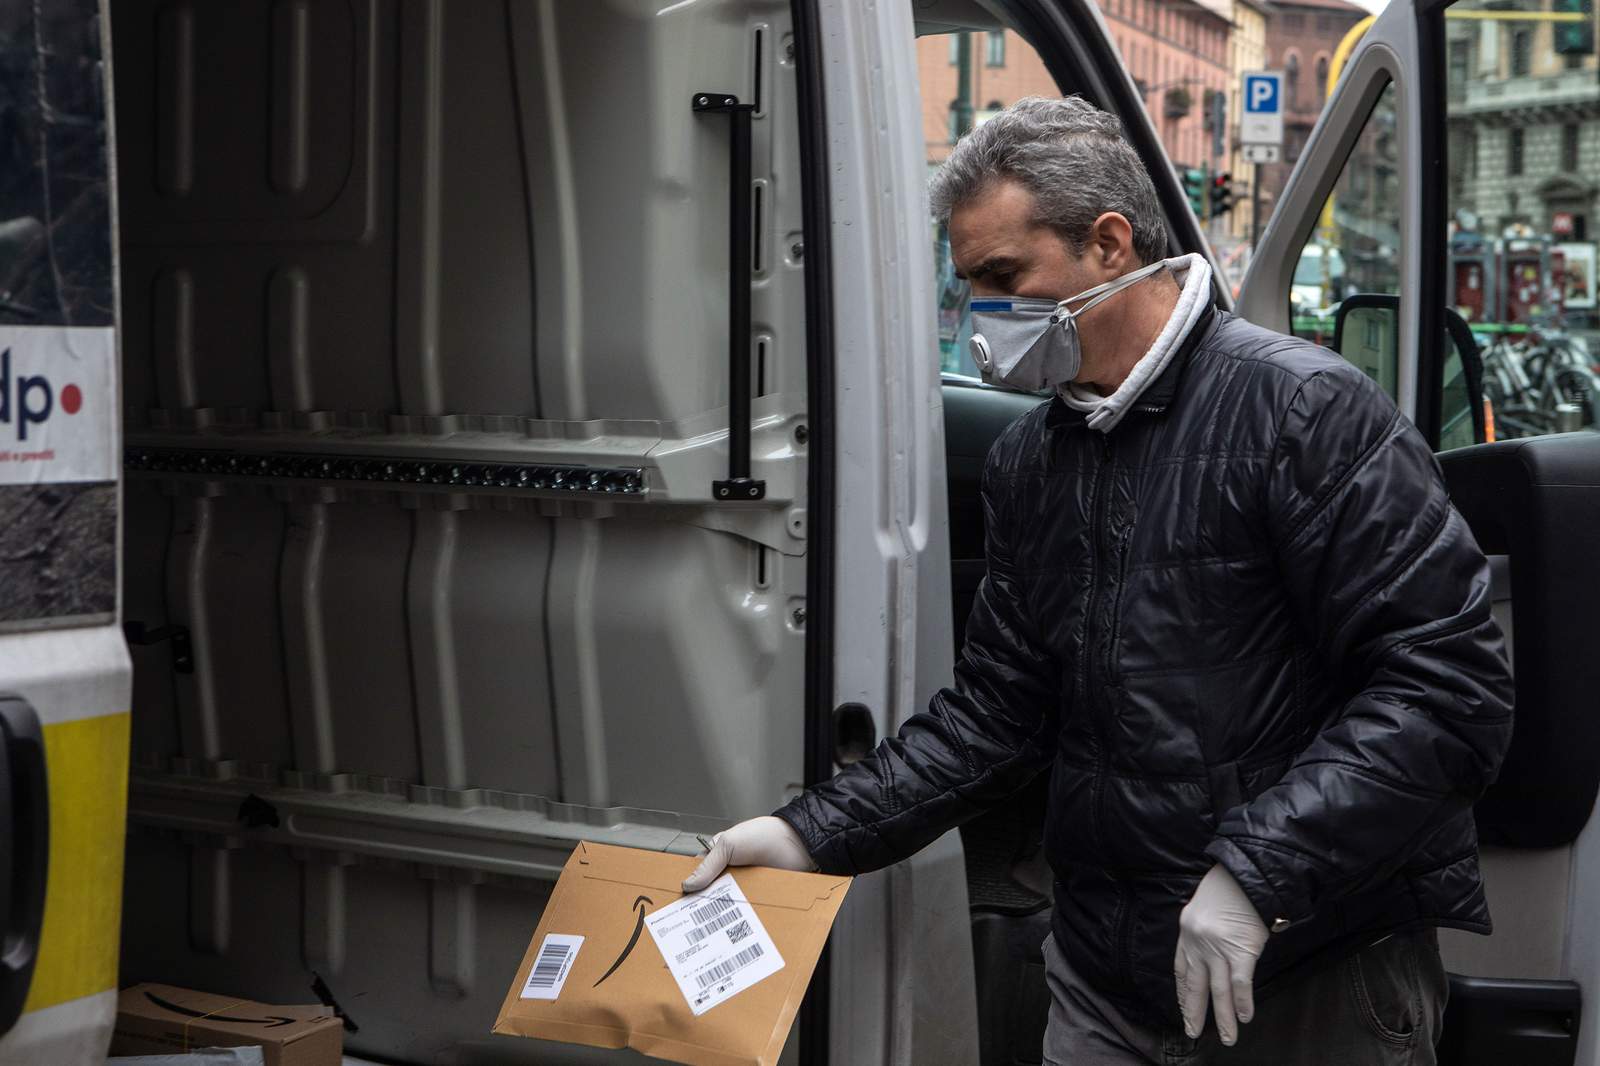 Amazon says some shipments could take longer because of coronavirus